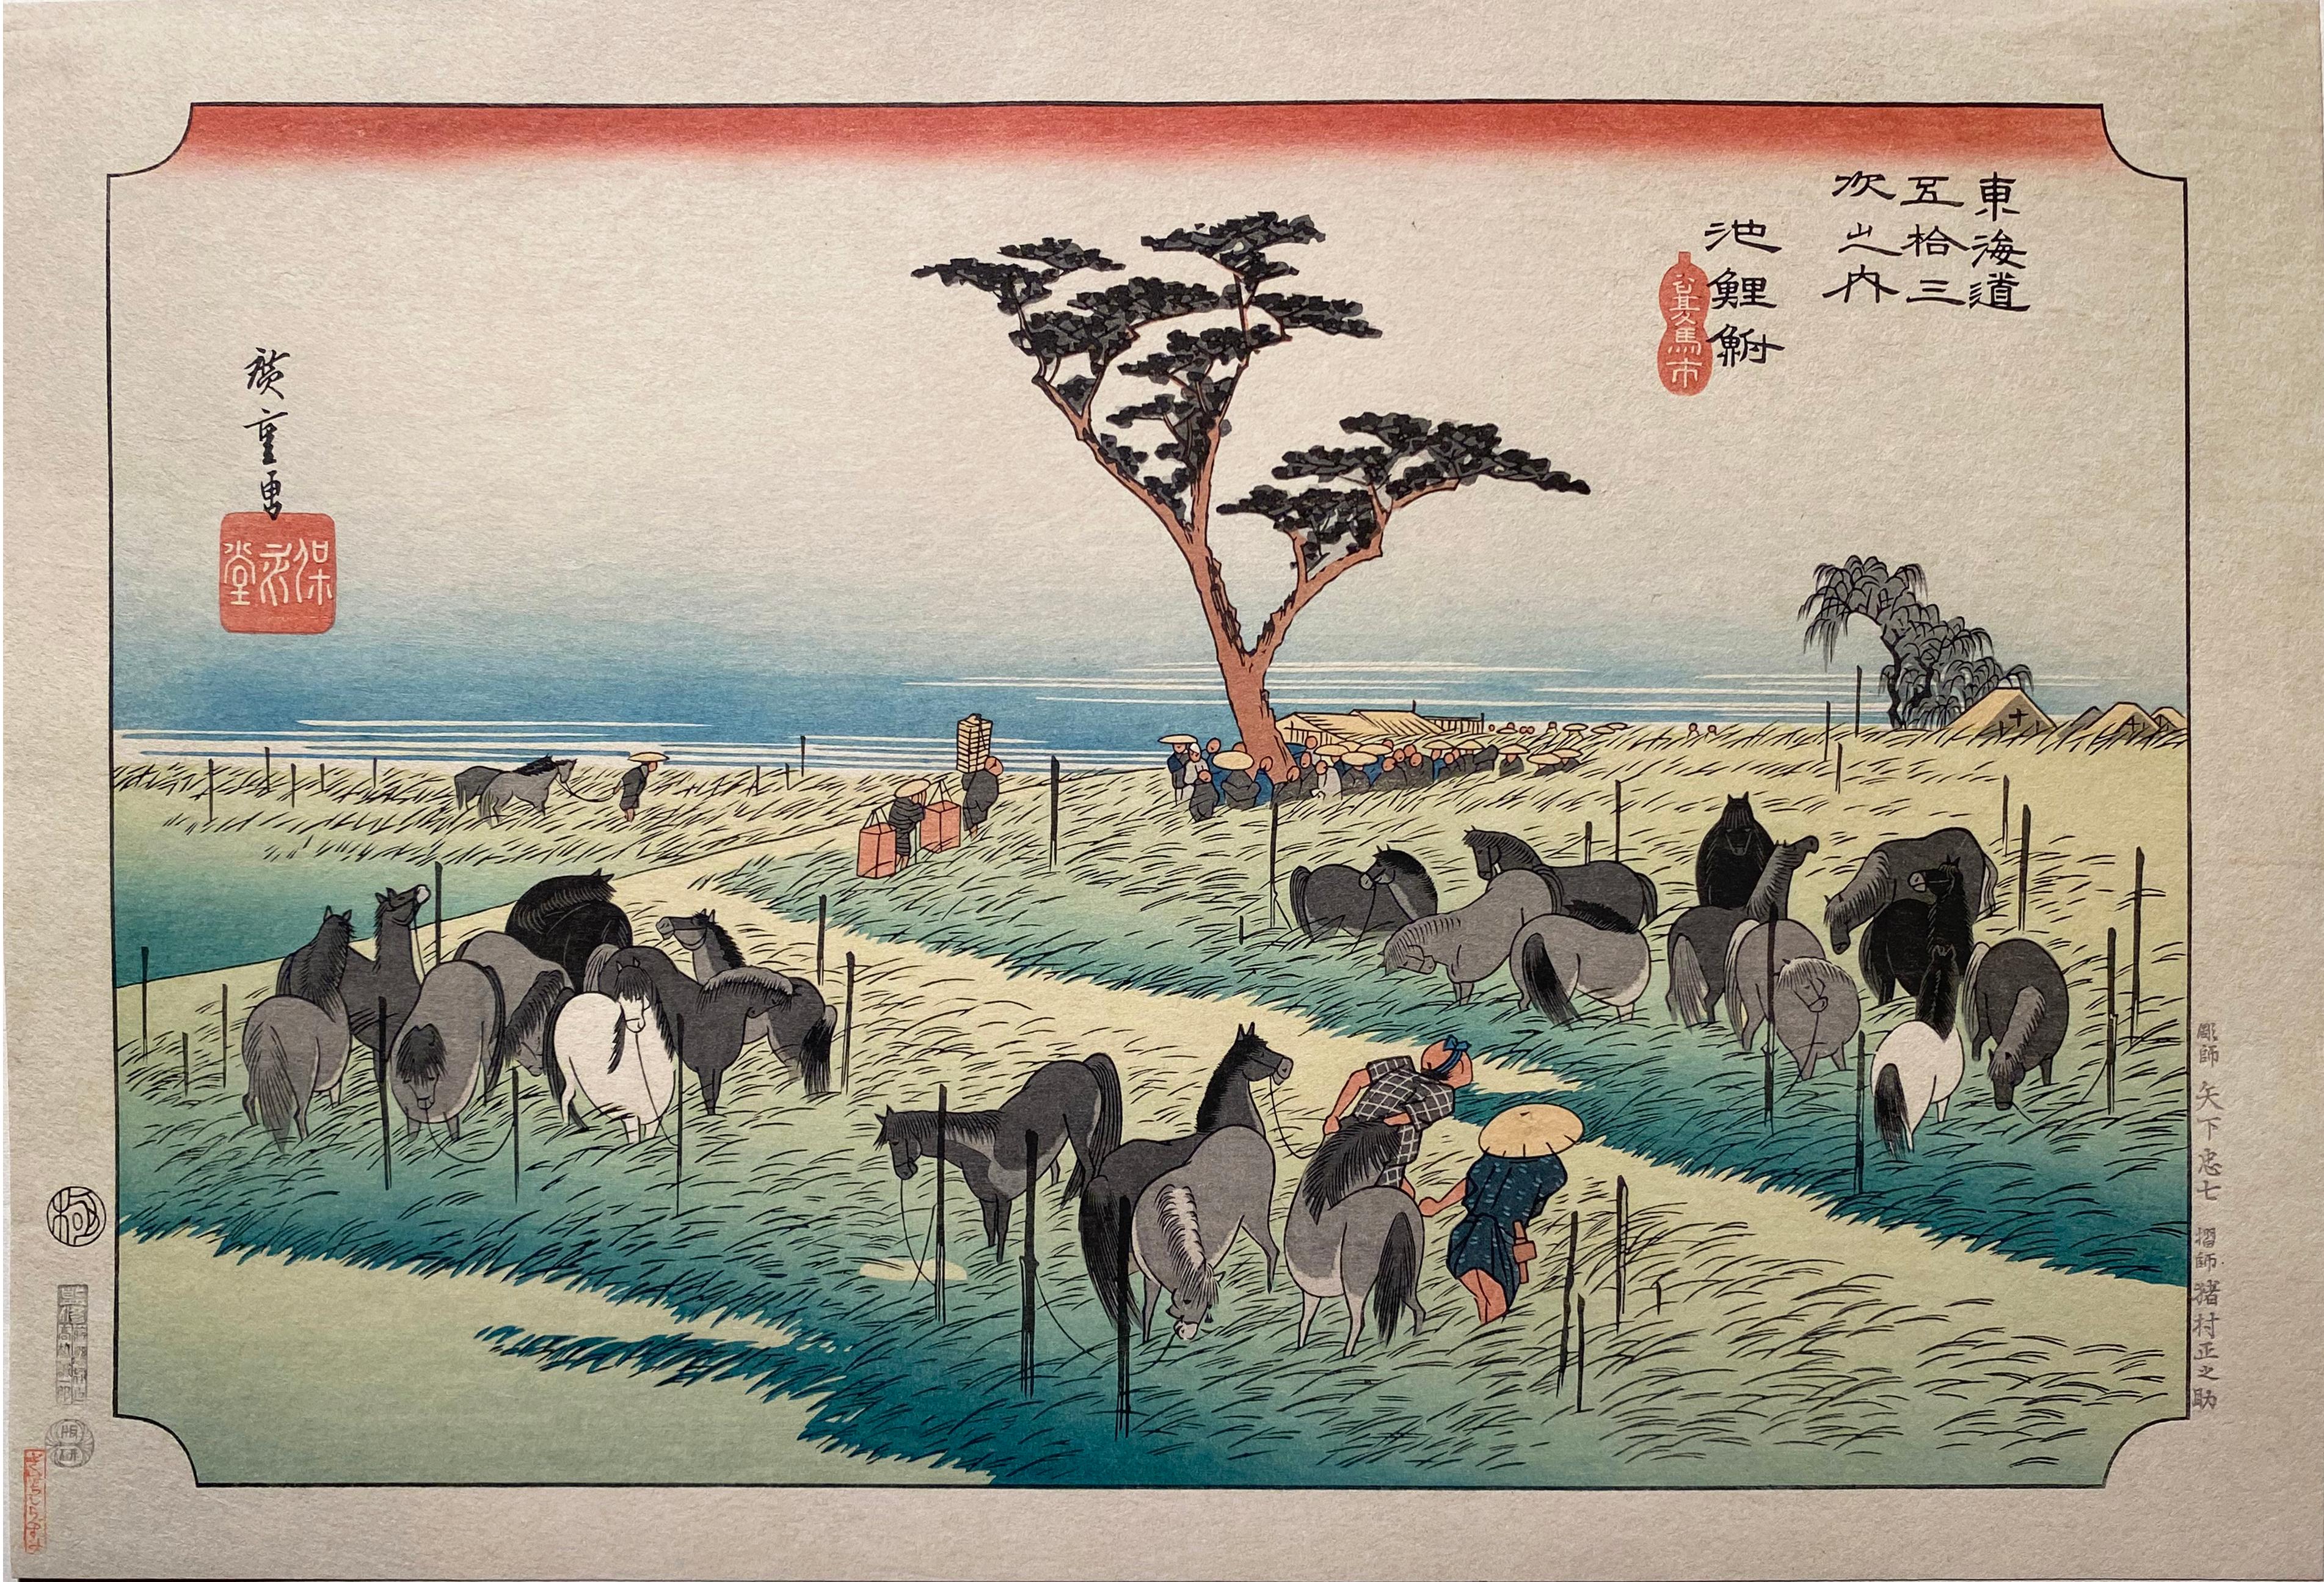 Utagawa Hiroshige (Ando Hiroshige) Landscape Print - 'Summer Horse Fair', After Utagawa Hiroshige 歌川廣重, Ukiyo-e Woodblock, Tokaido